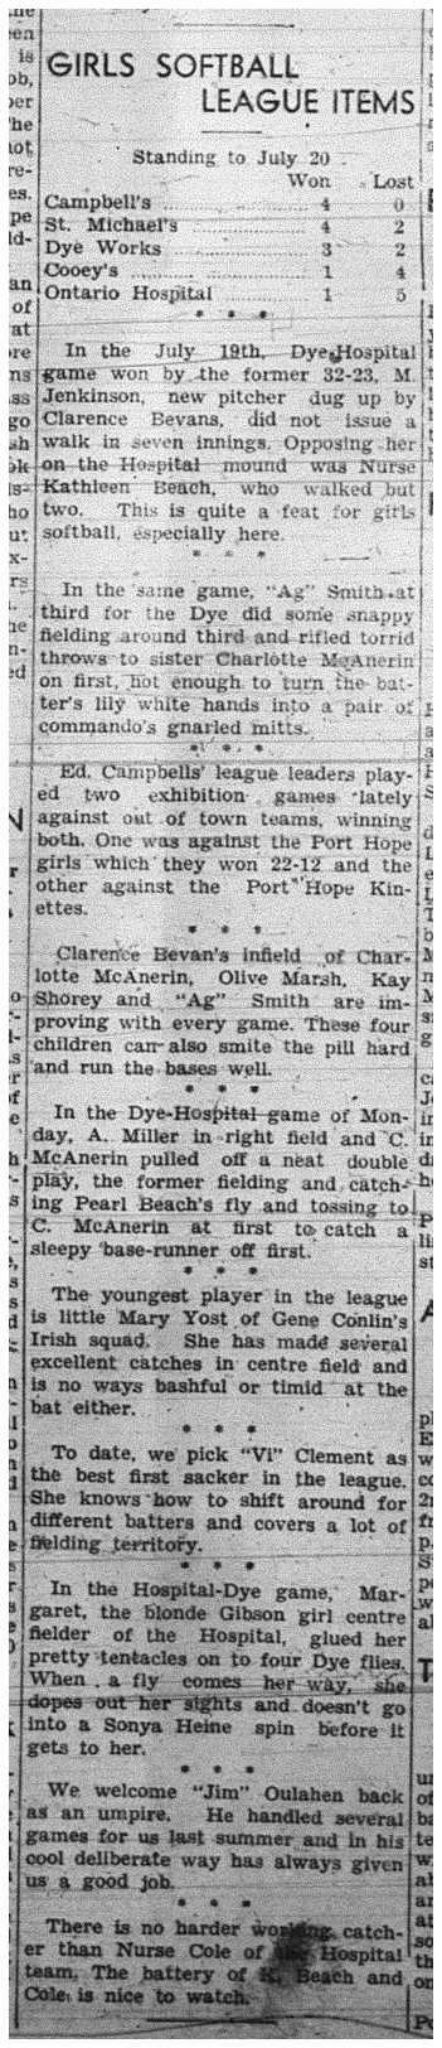 1943-07-22 Softball - Girls News